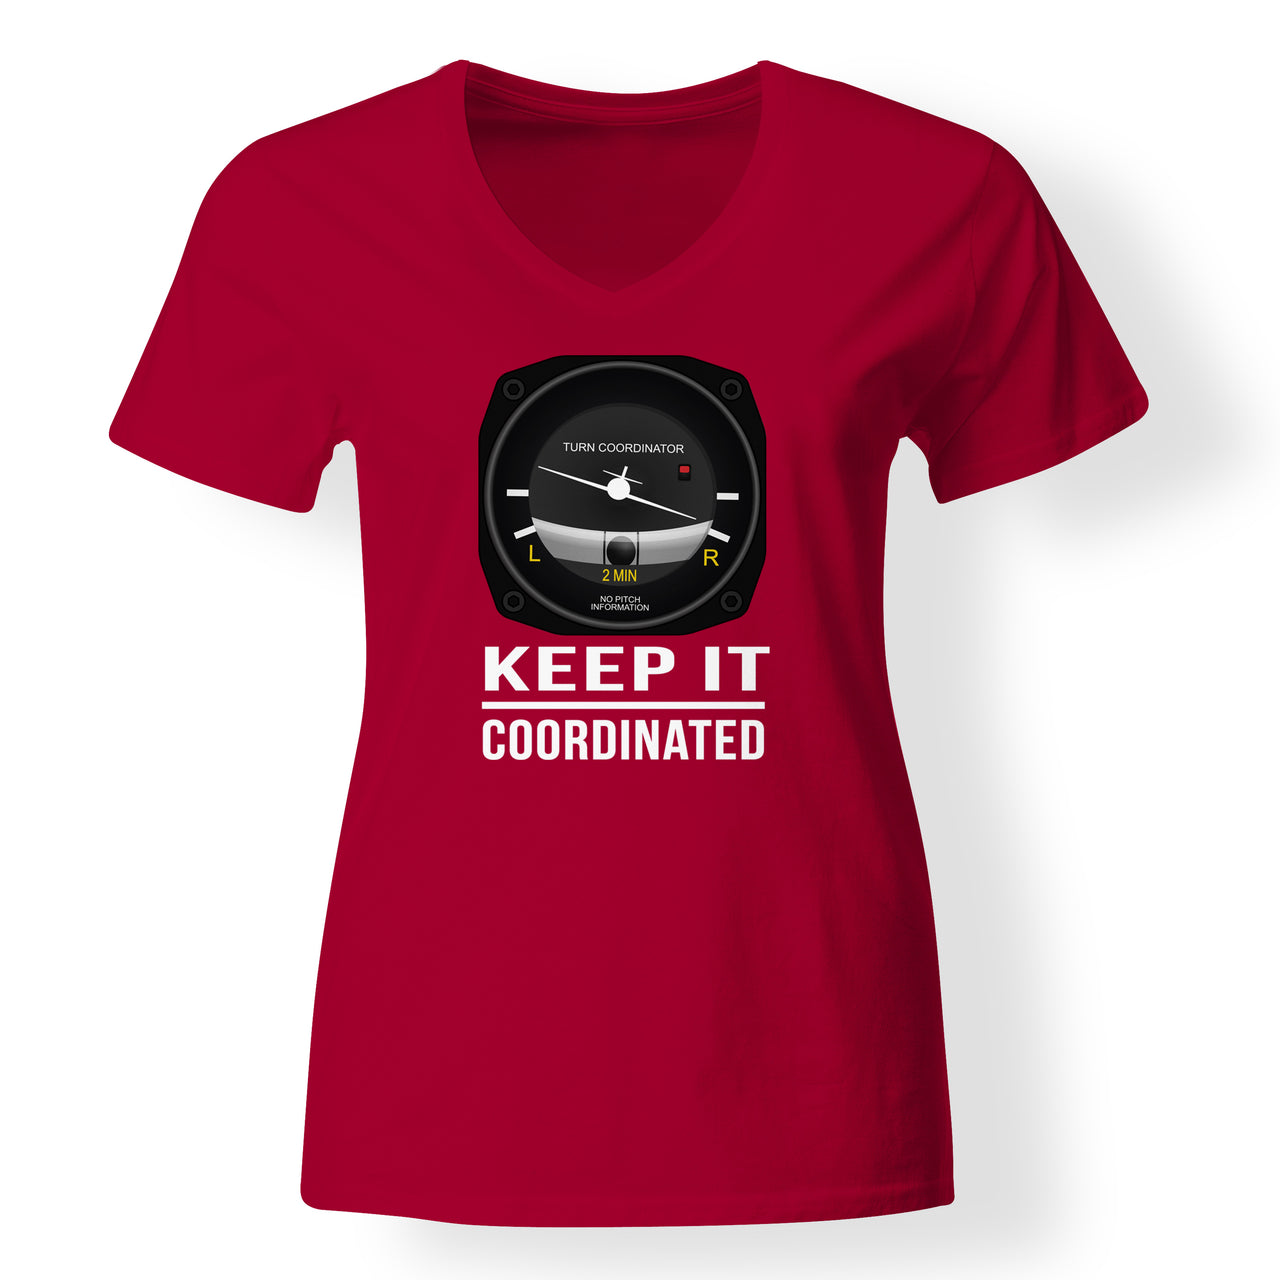 Keep It Coordinated Designed V-Neck T-Shirts